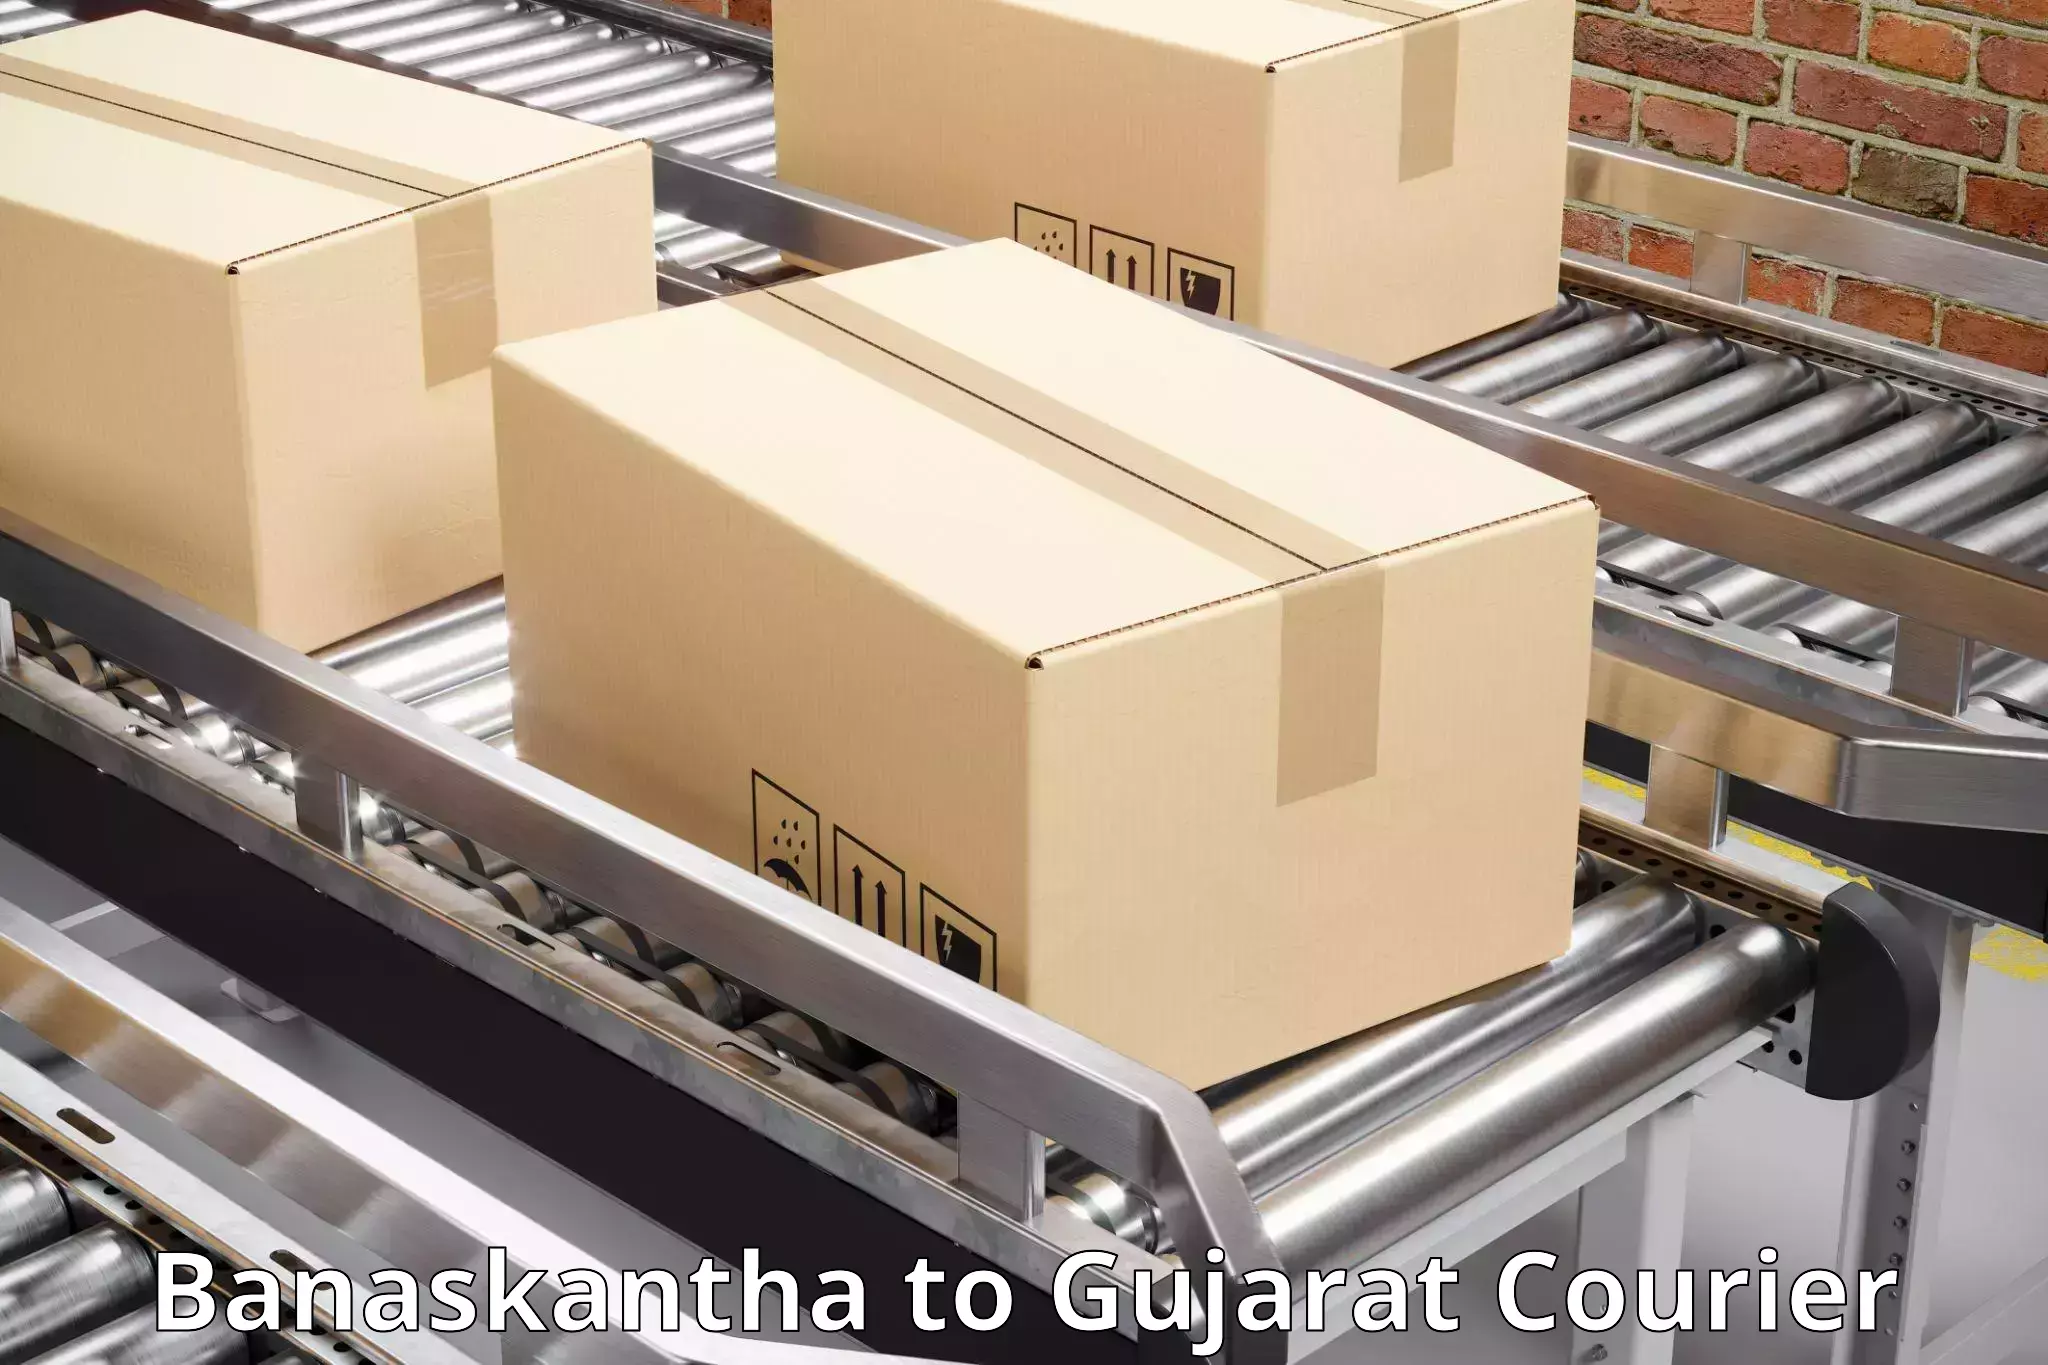 Express delivery capabilities Banaskantha to Gandhinagar